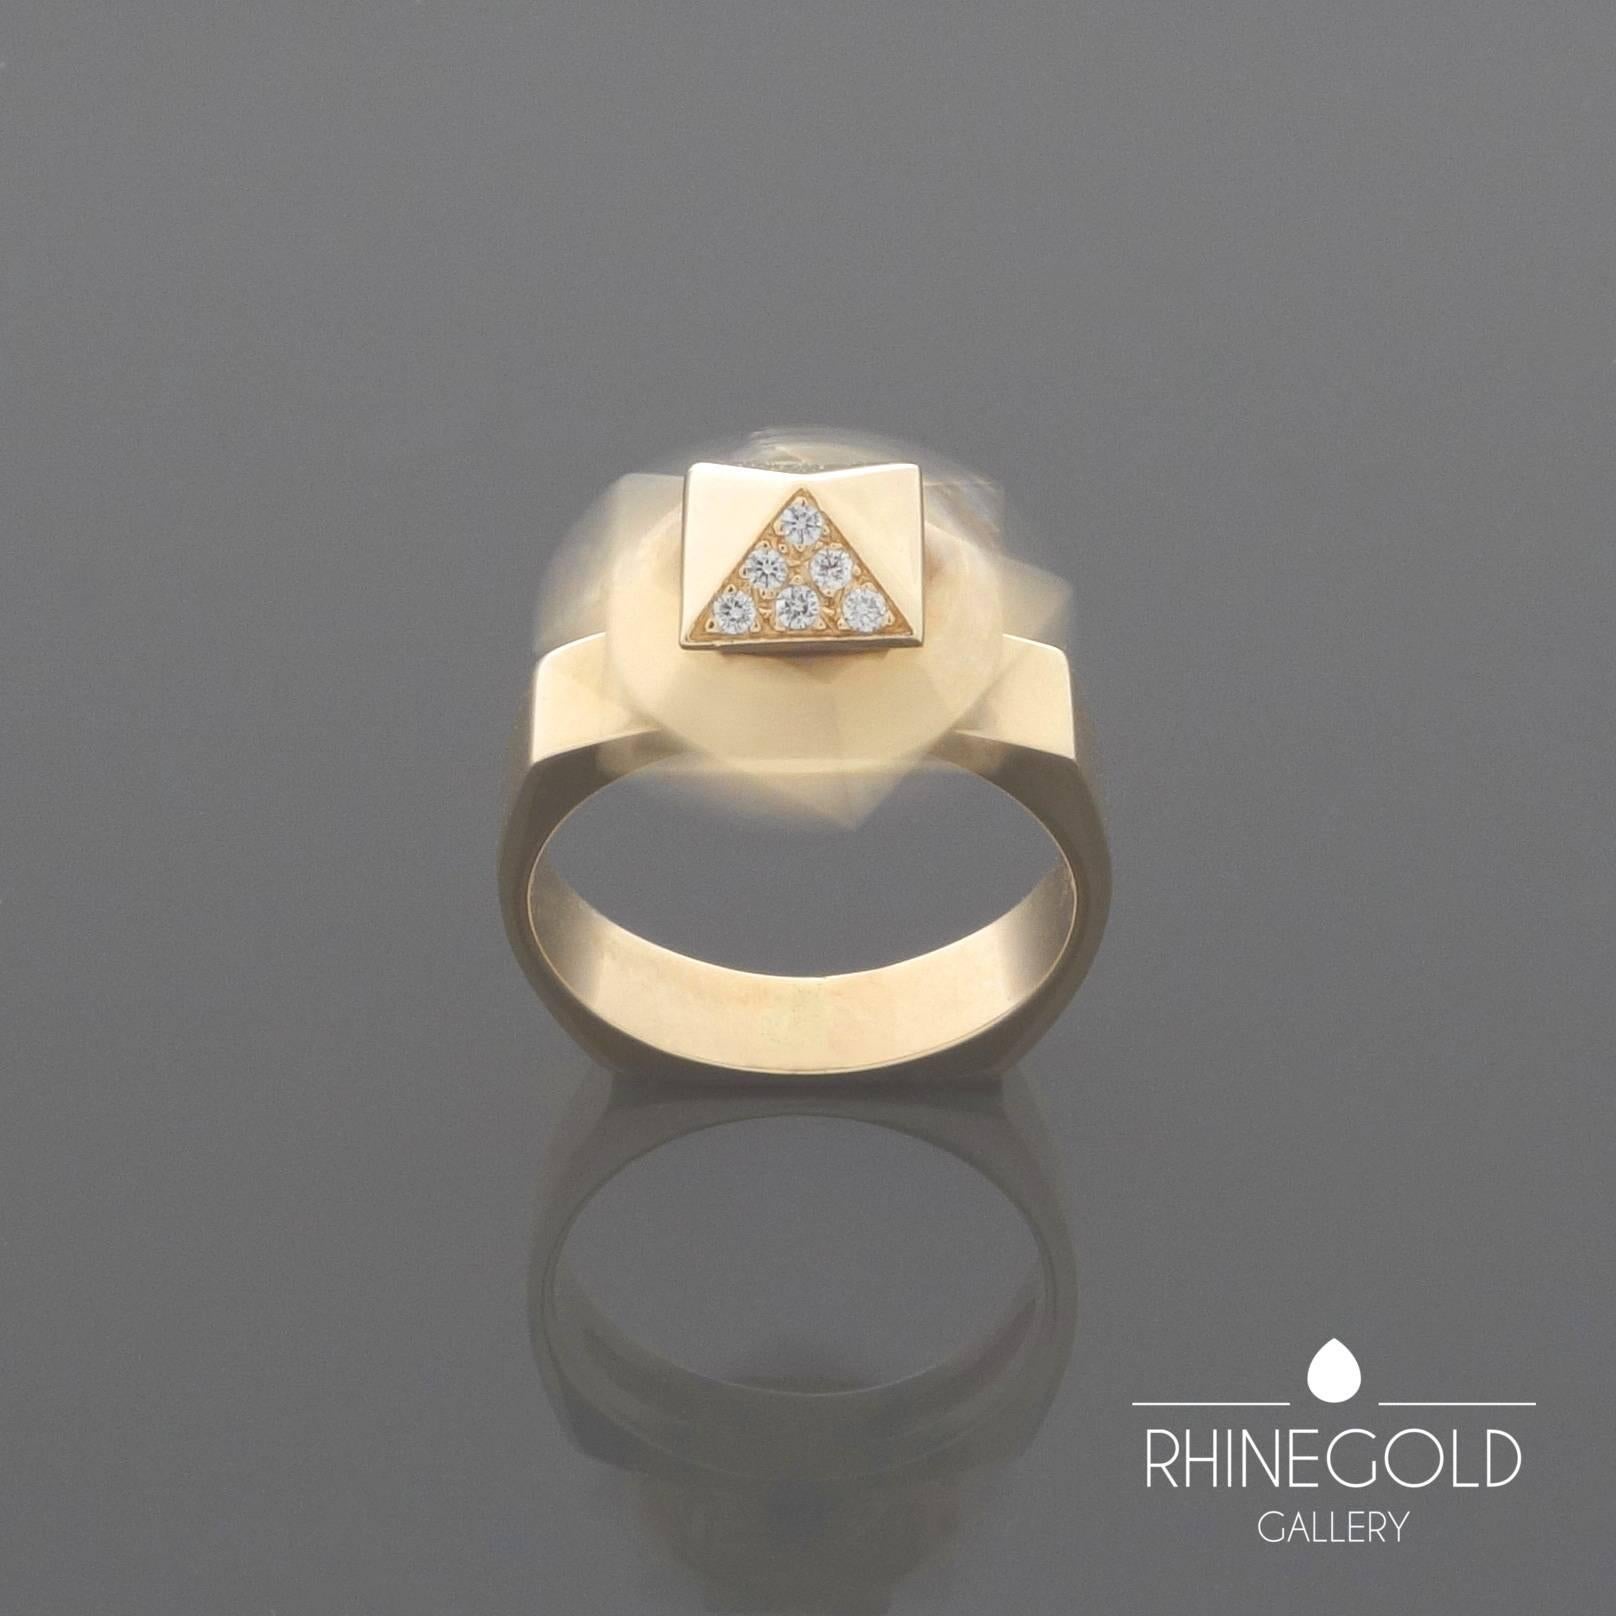 C. Teufel: Kinetic Modernist Diamond Gold Ring 
14k yellow gold, 15 brilliant cut diamonds (vvs-vs, total ca. 0.25 ct.)
Ring head: 1.1 cm to 1.1 cm (approx. 7/16